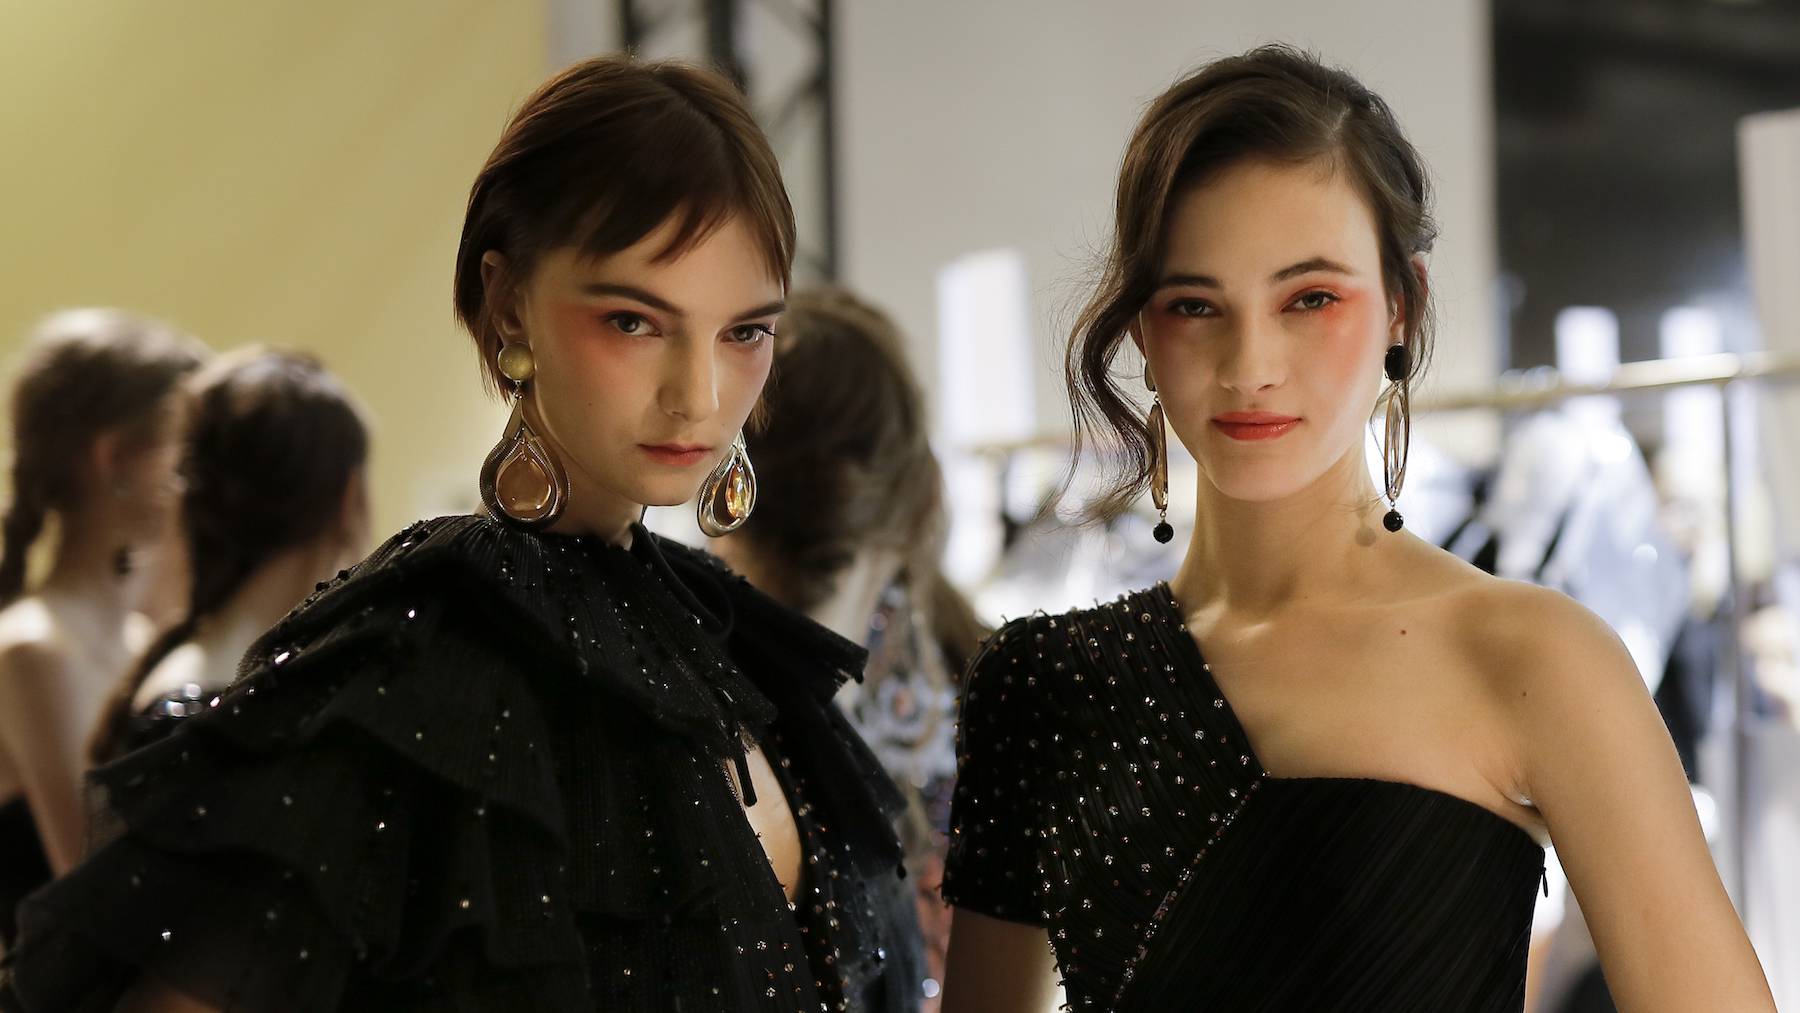 Models backstage at Giorgio Armani Privé haute couture show at Paris Fashion Week SS 2017. L'Oréal has licensed Armani's beauty line since 1988.